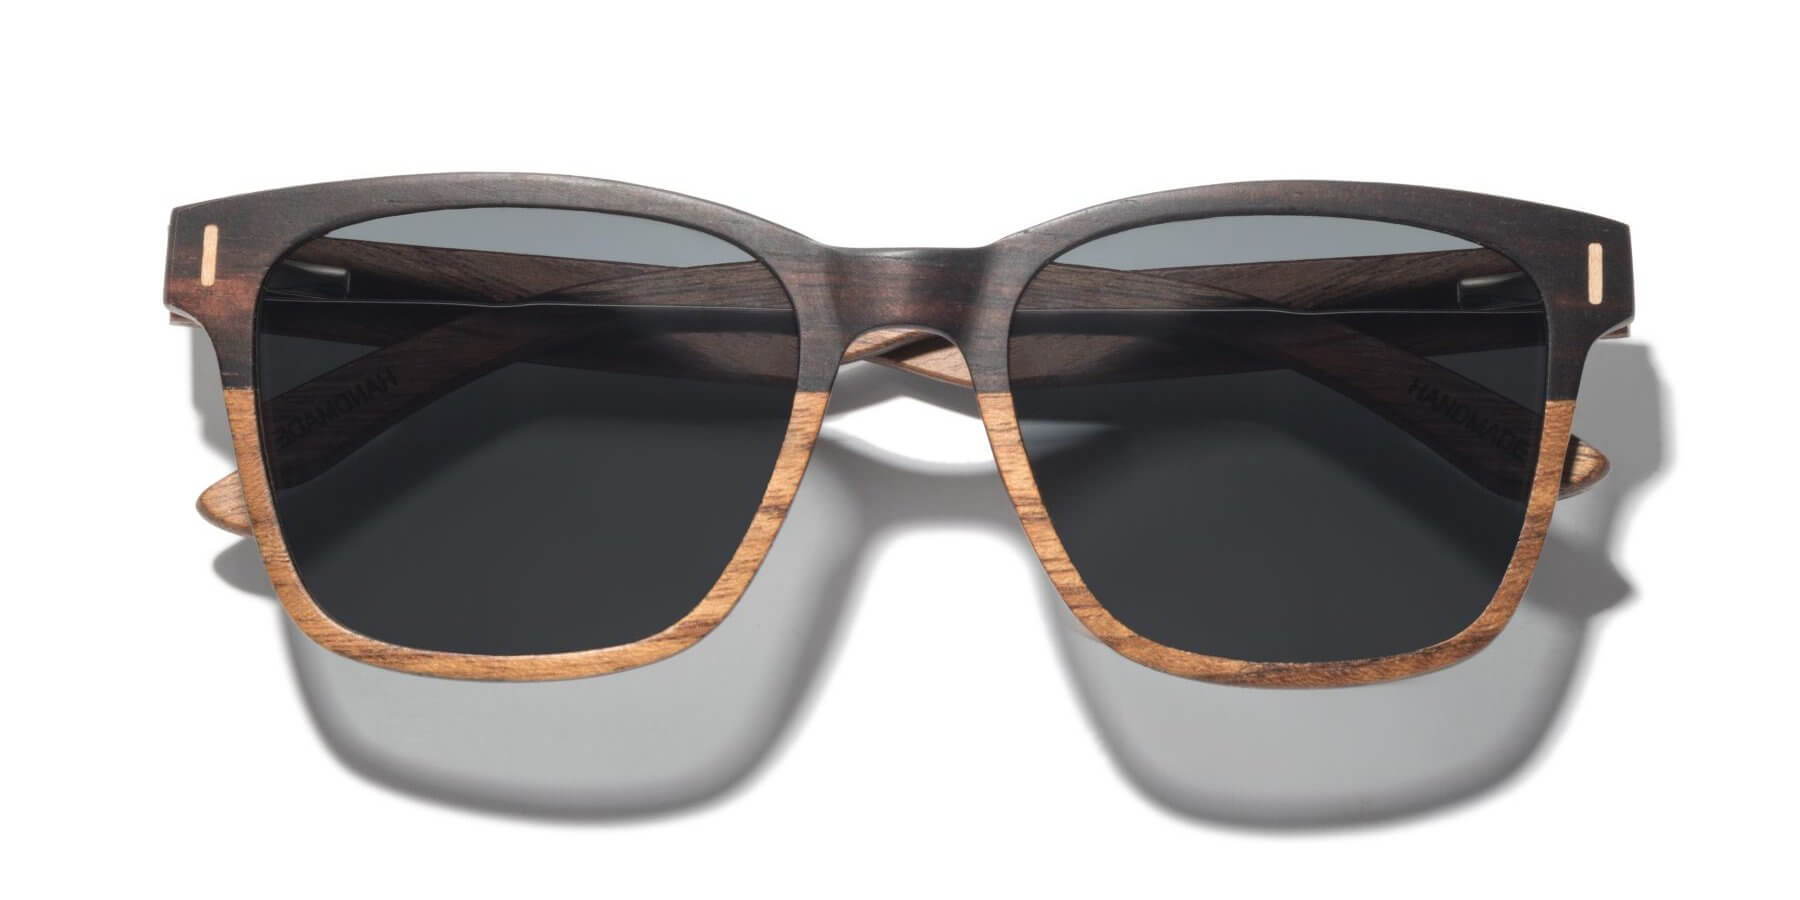 Kraywoods Oxford, Men square ebony wood sunglasses with 100% UV protection and polarized lenses